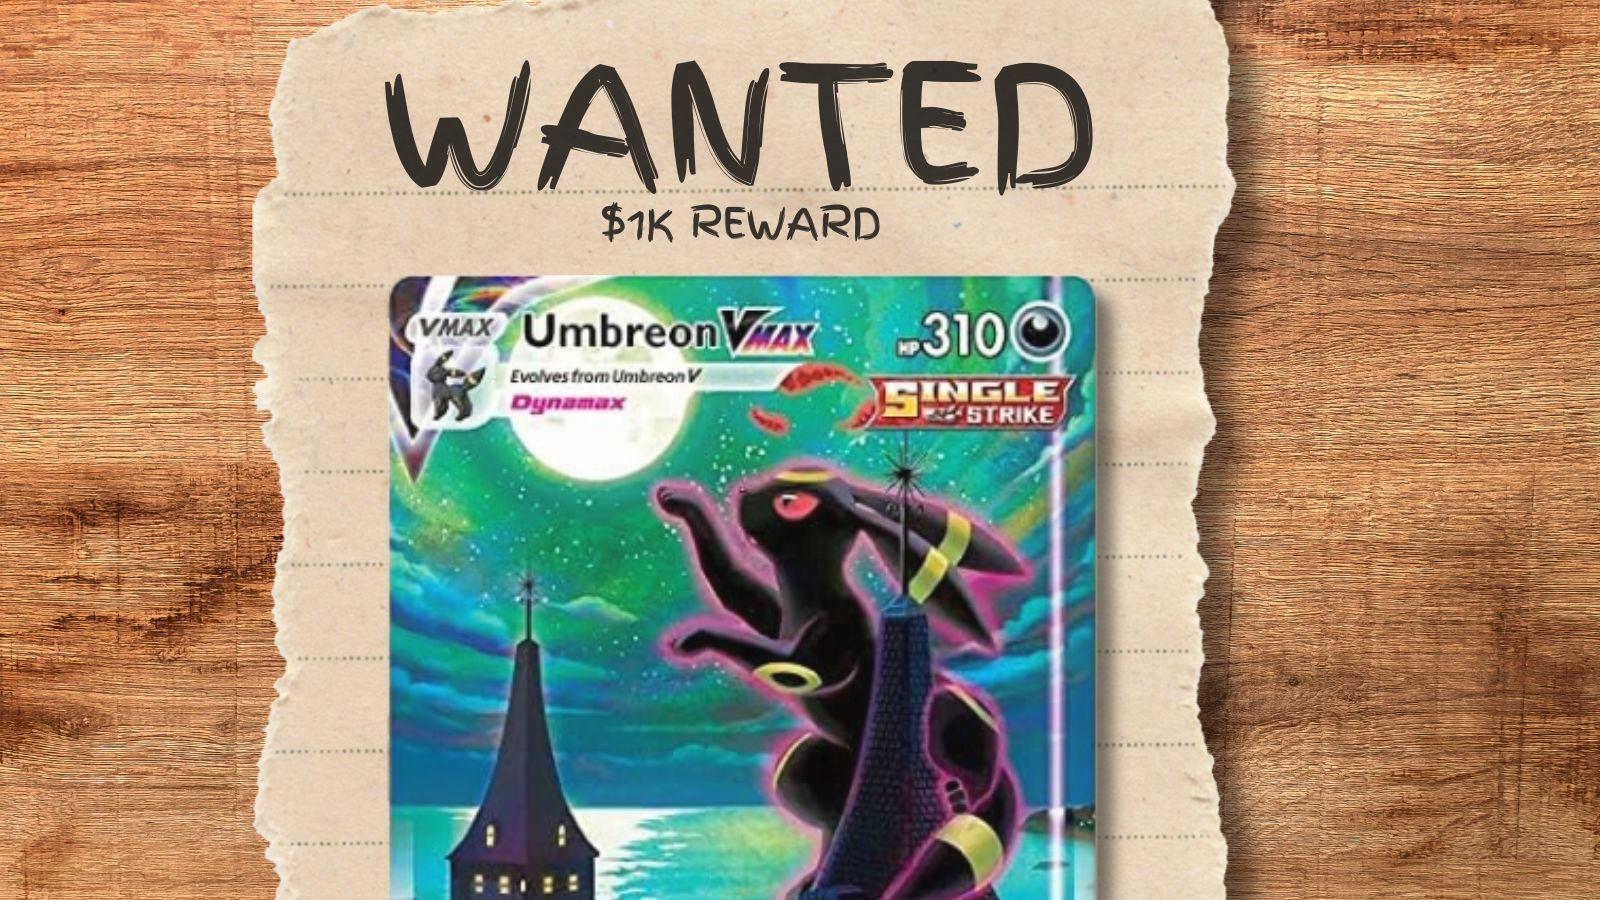 "Wanted $1K reward" for Moonbreon Pokemon card.